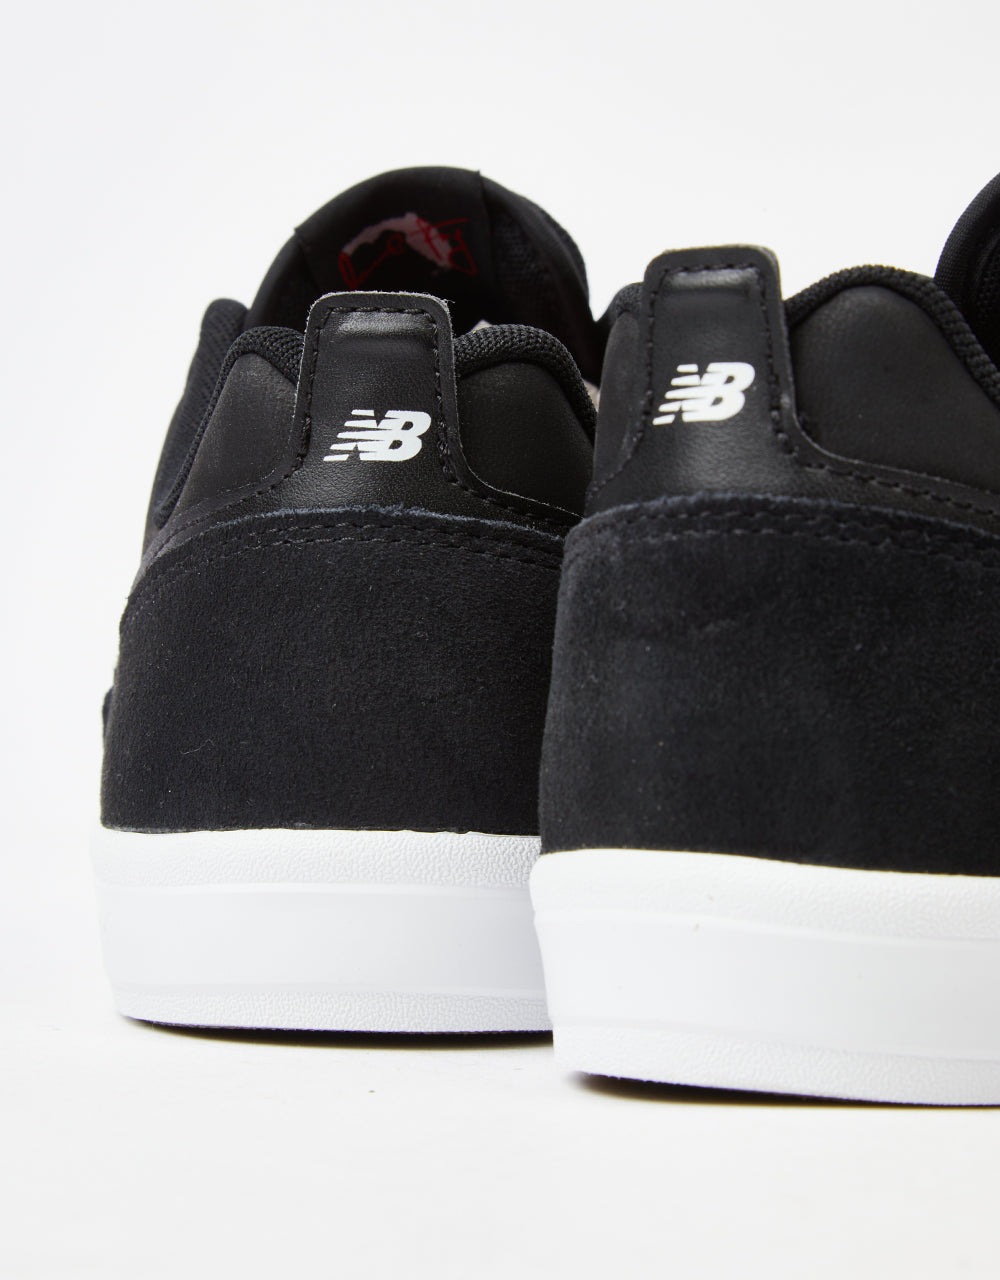 New Balance Numeric Jamie Foy 306 Skate Shoes - Black/White